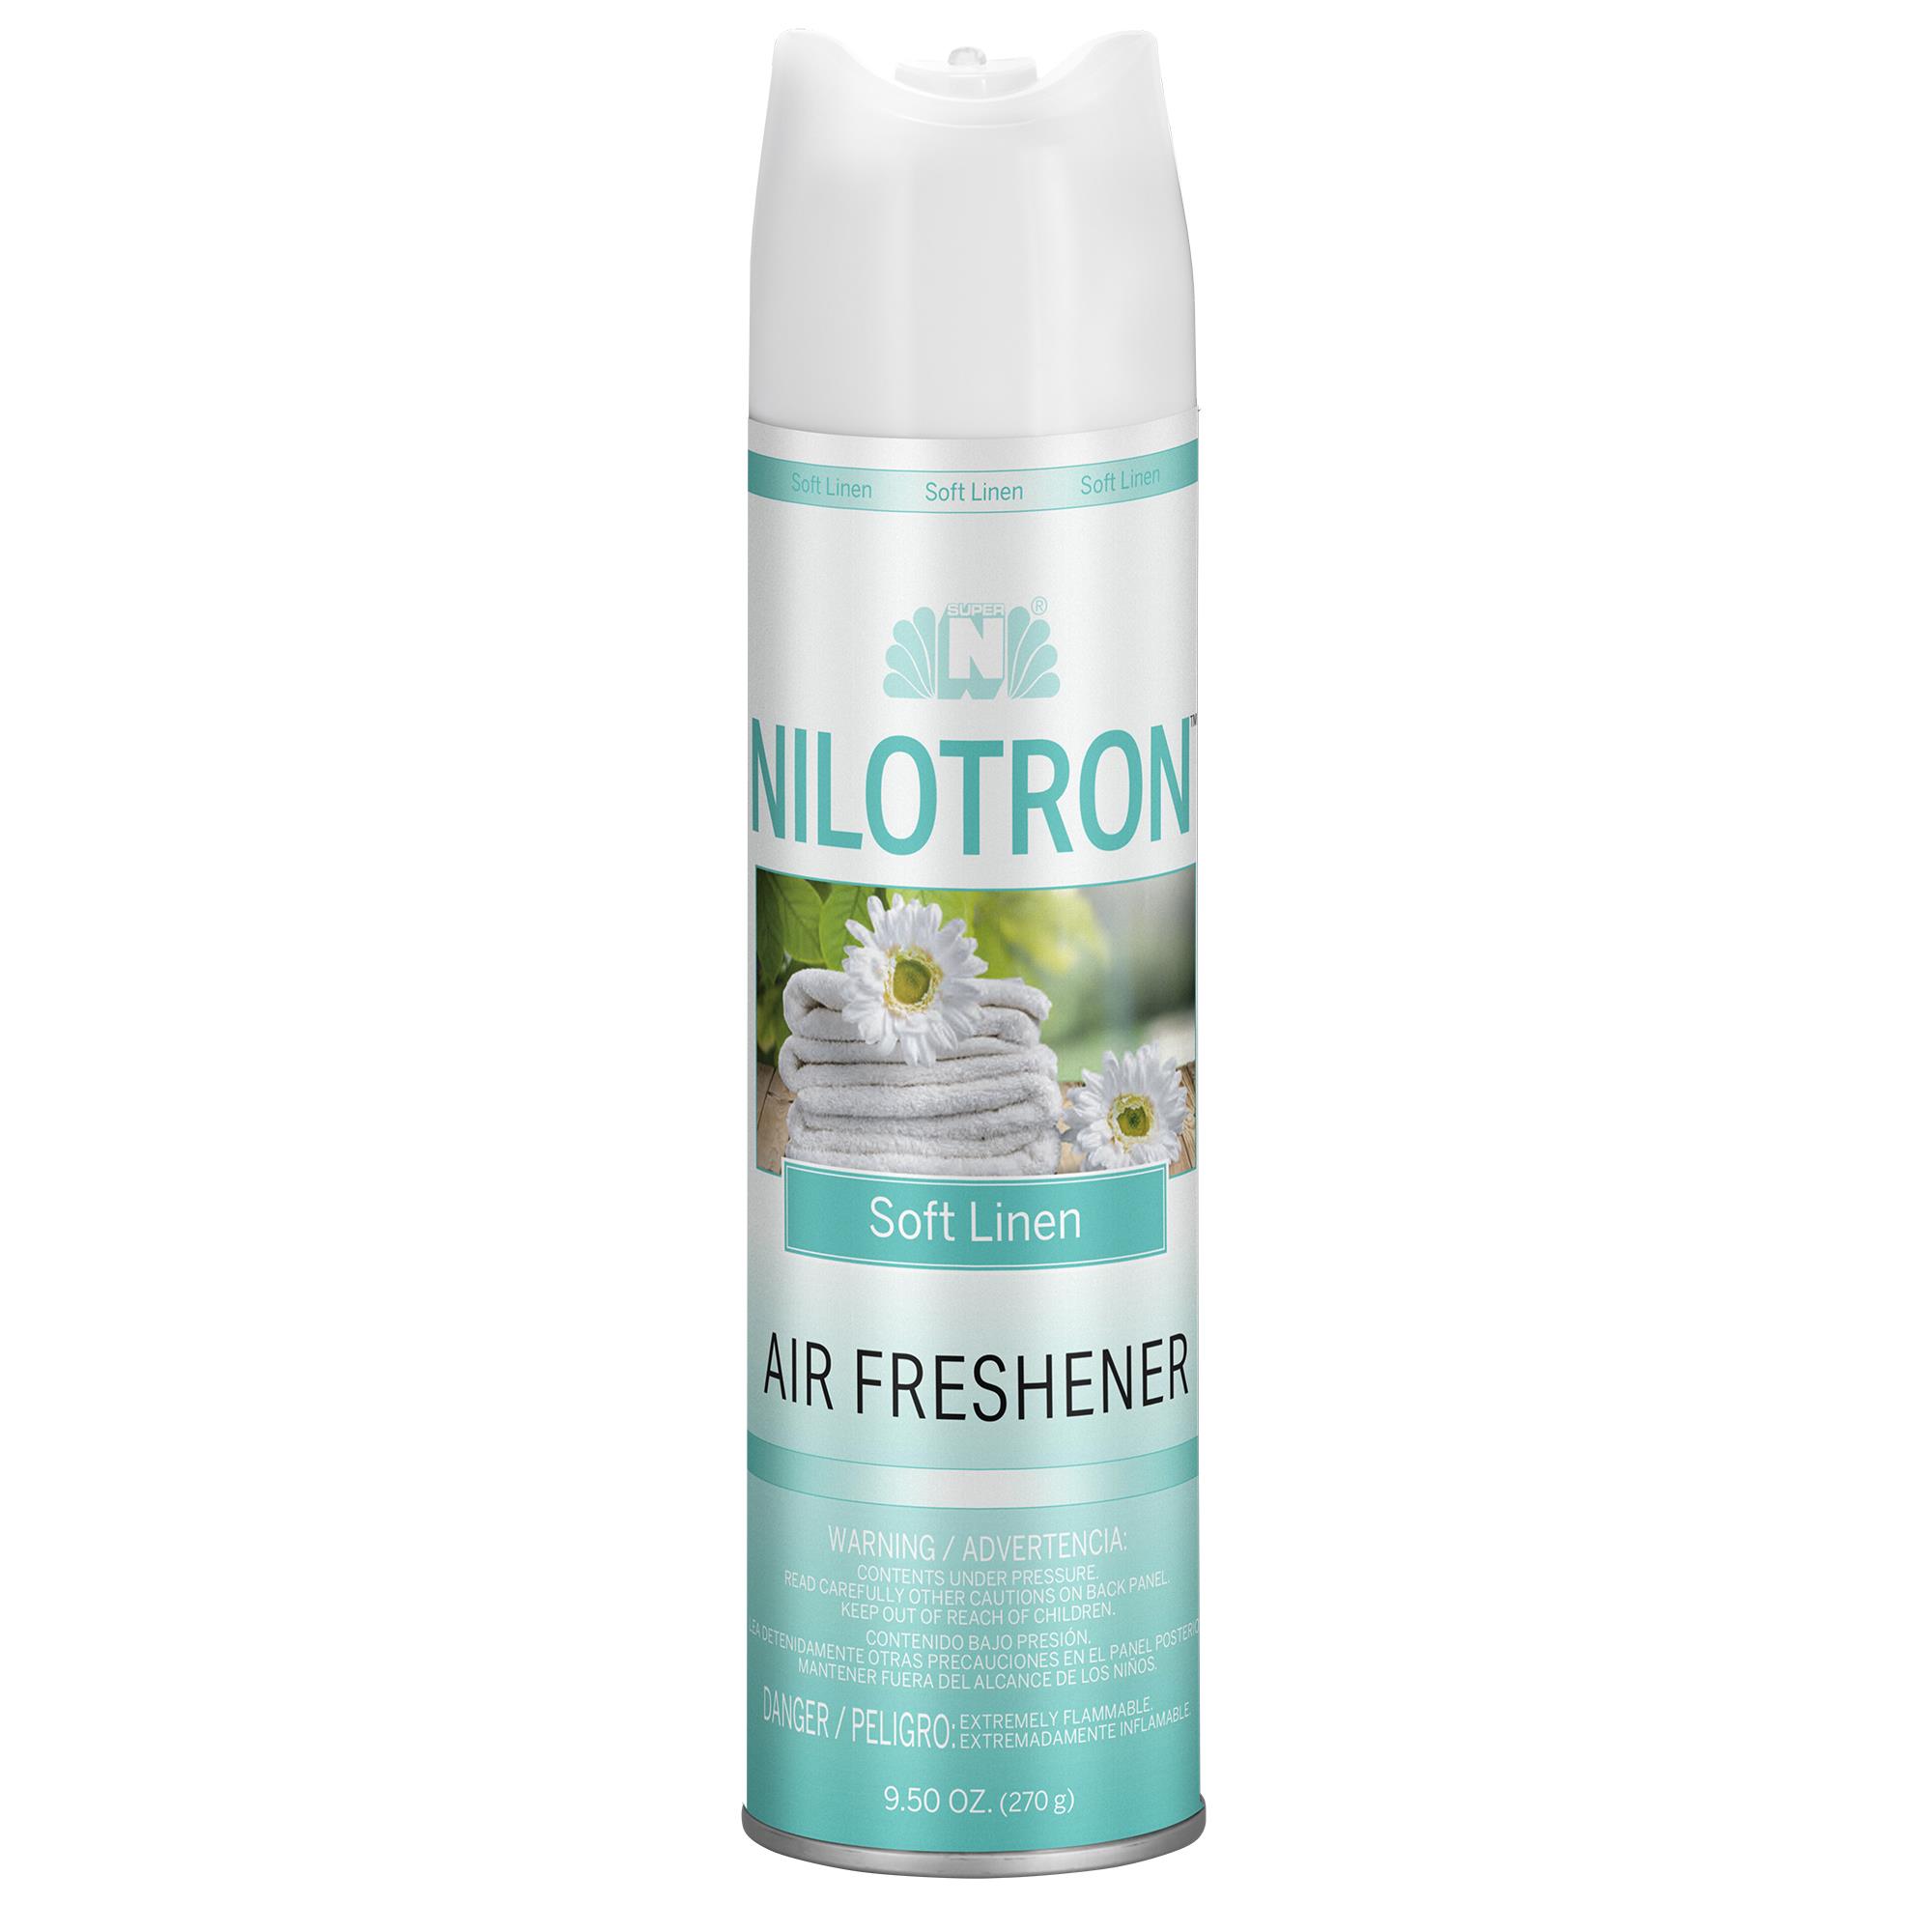 Nilotron Air Freshener Soft 
Linen 12/9.5oz